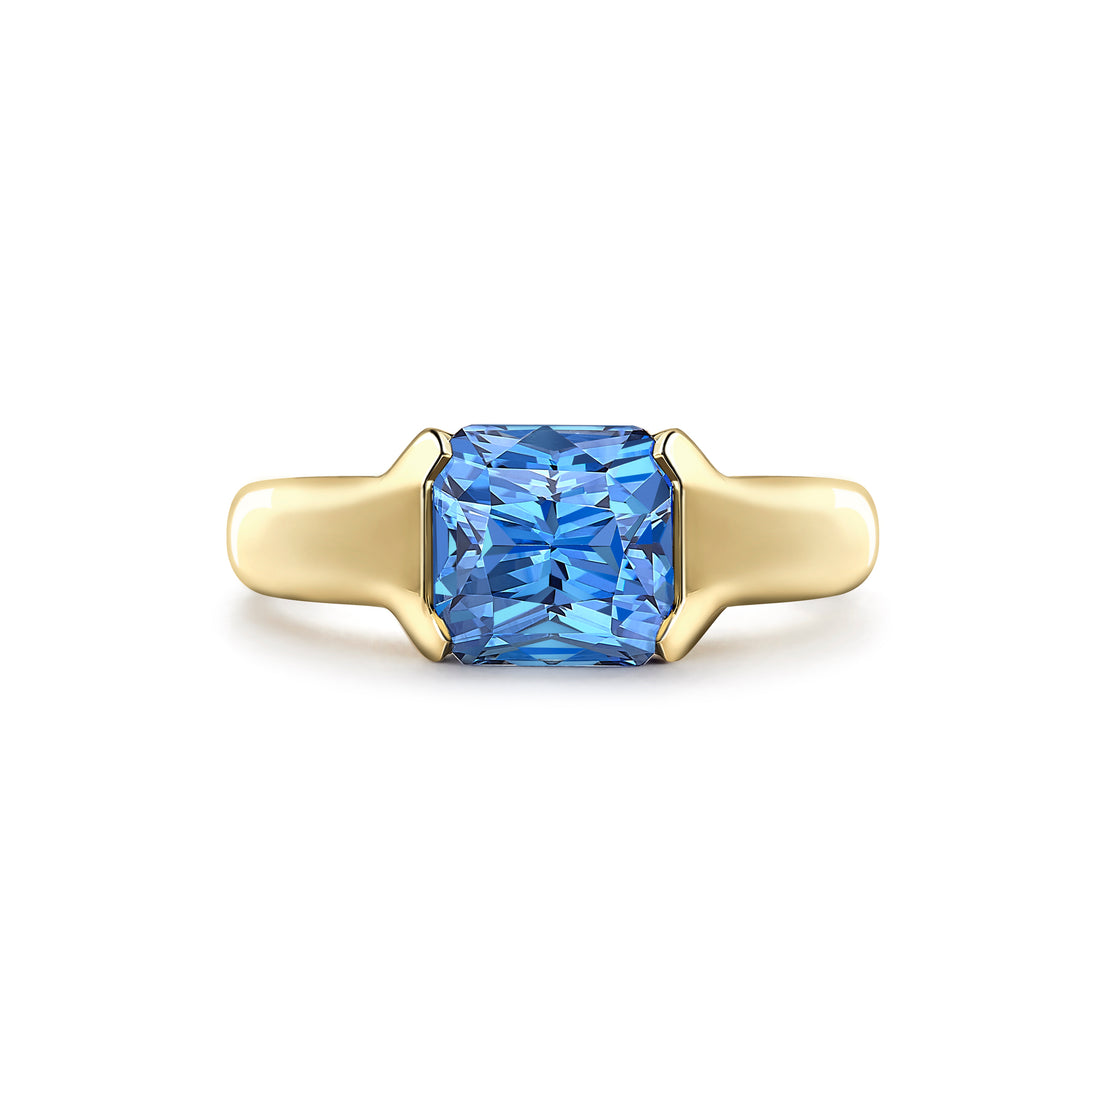  Blue Sri Lankan Sapphire Solitaire Ring by Hattie Rickards | The Cut London